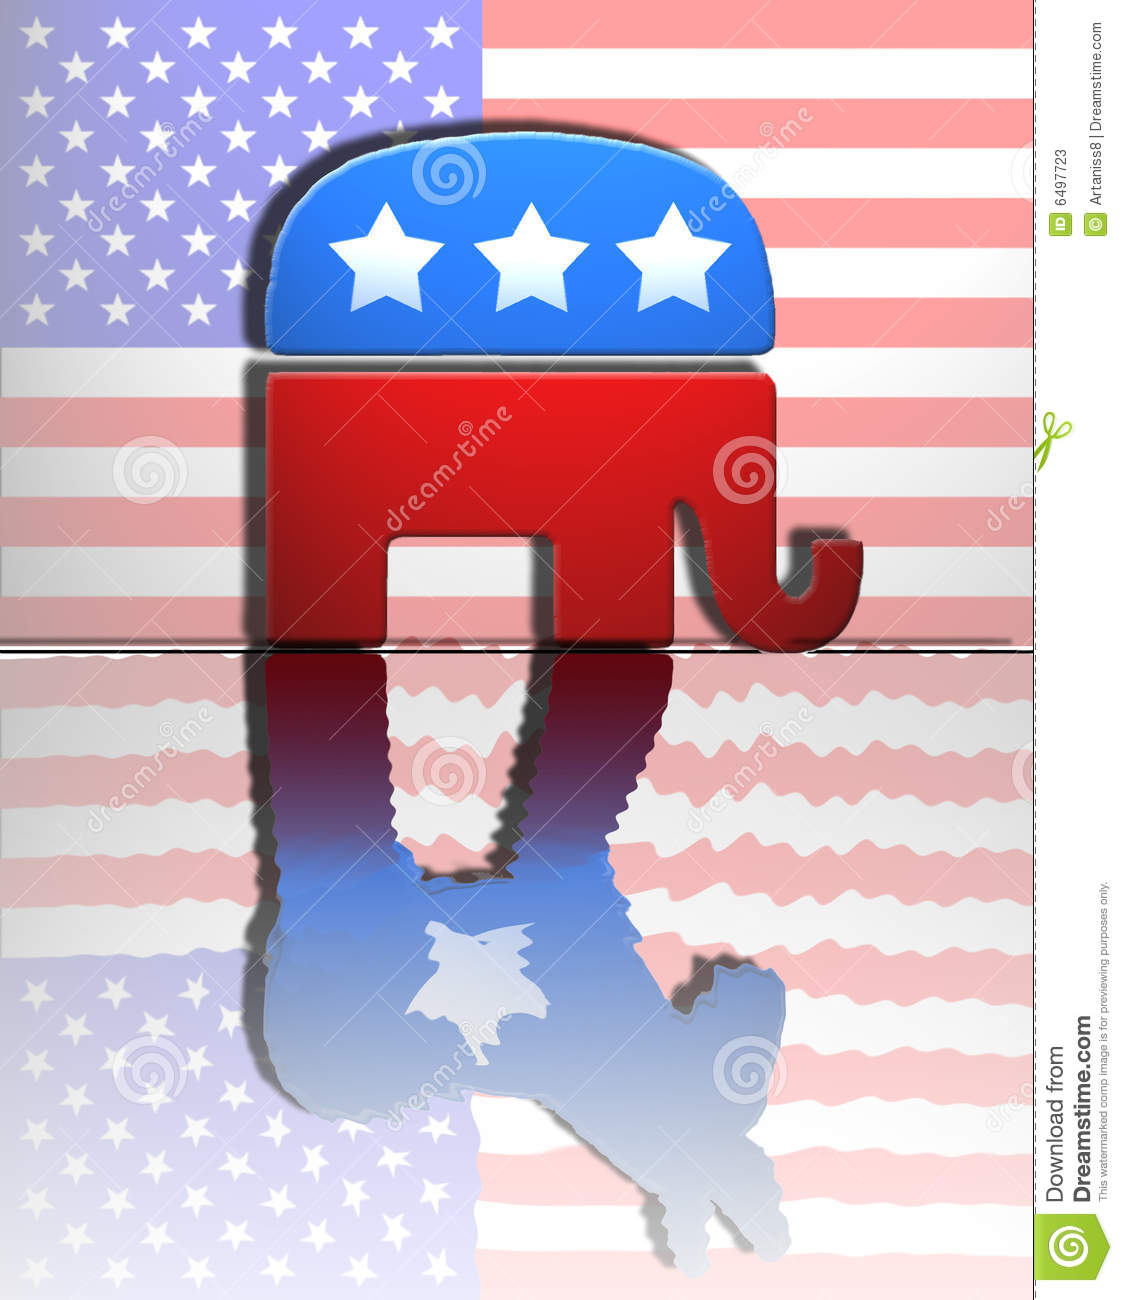 Republican Democrat Editorial Stock Photo   Image  6497723